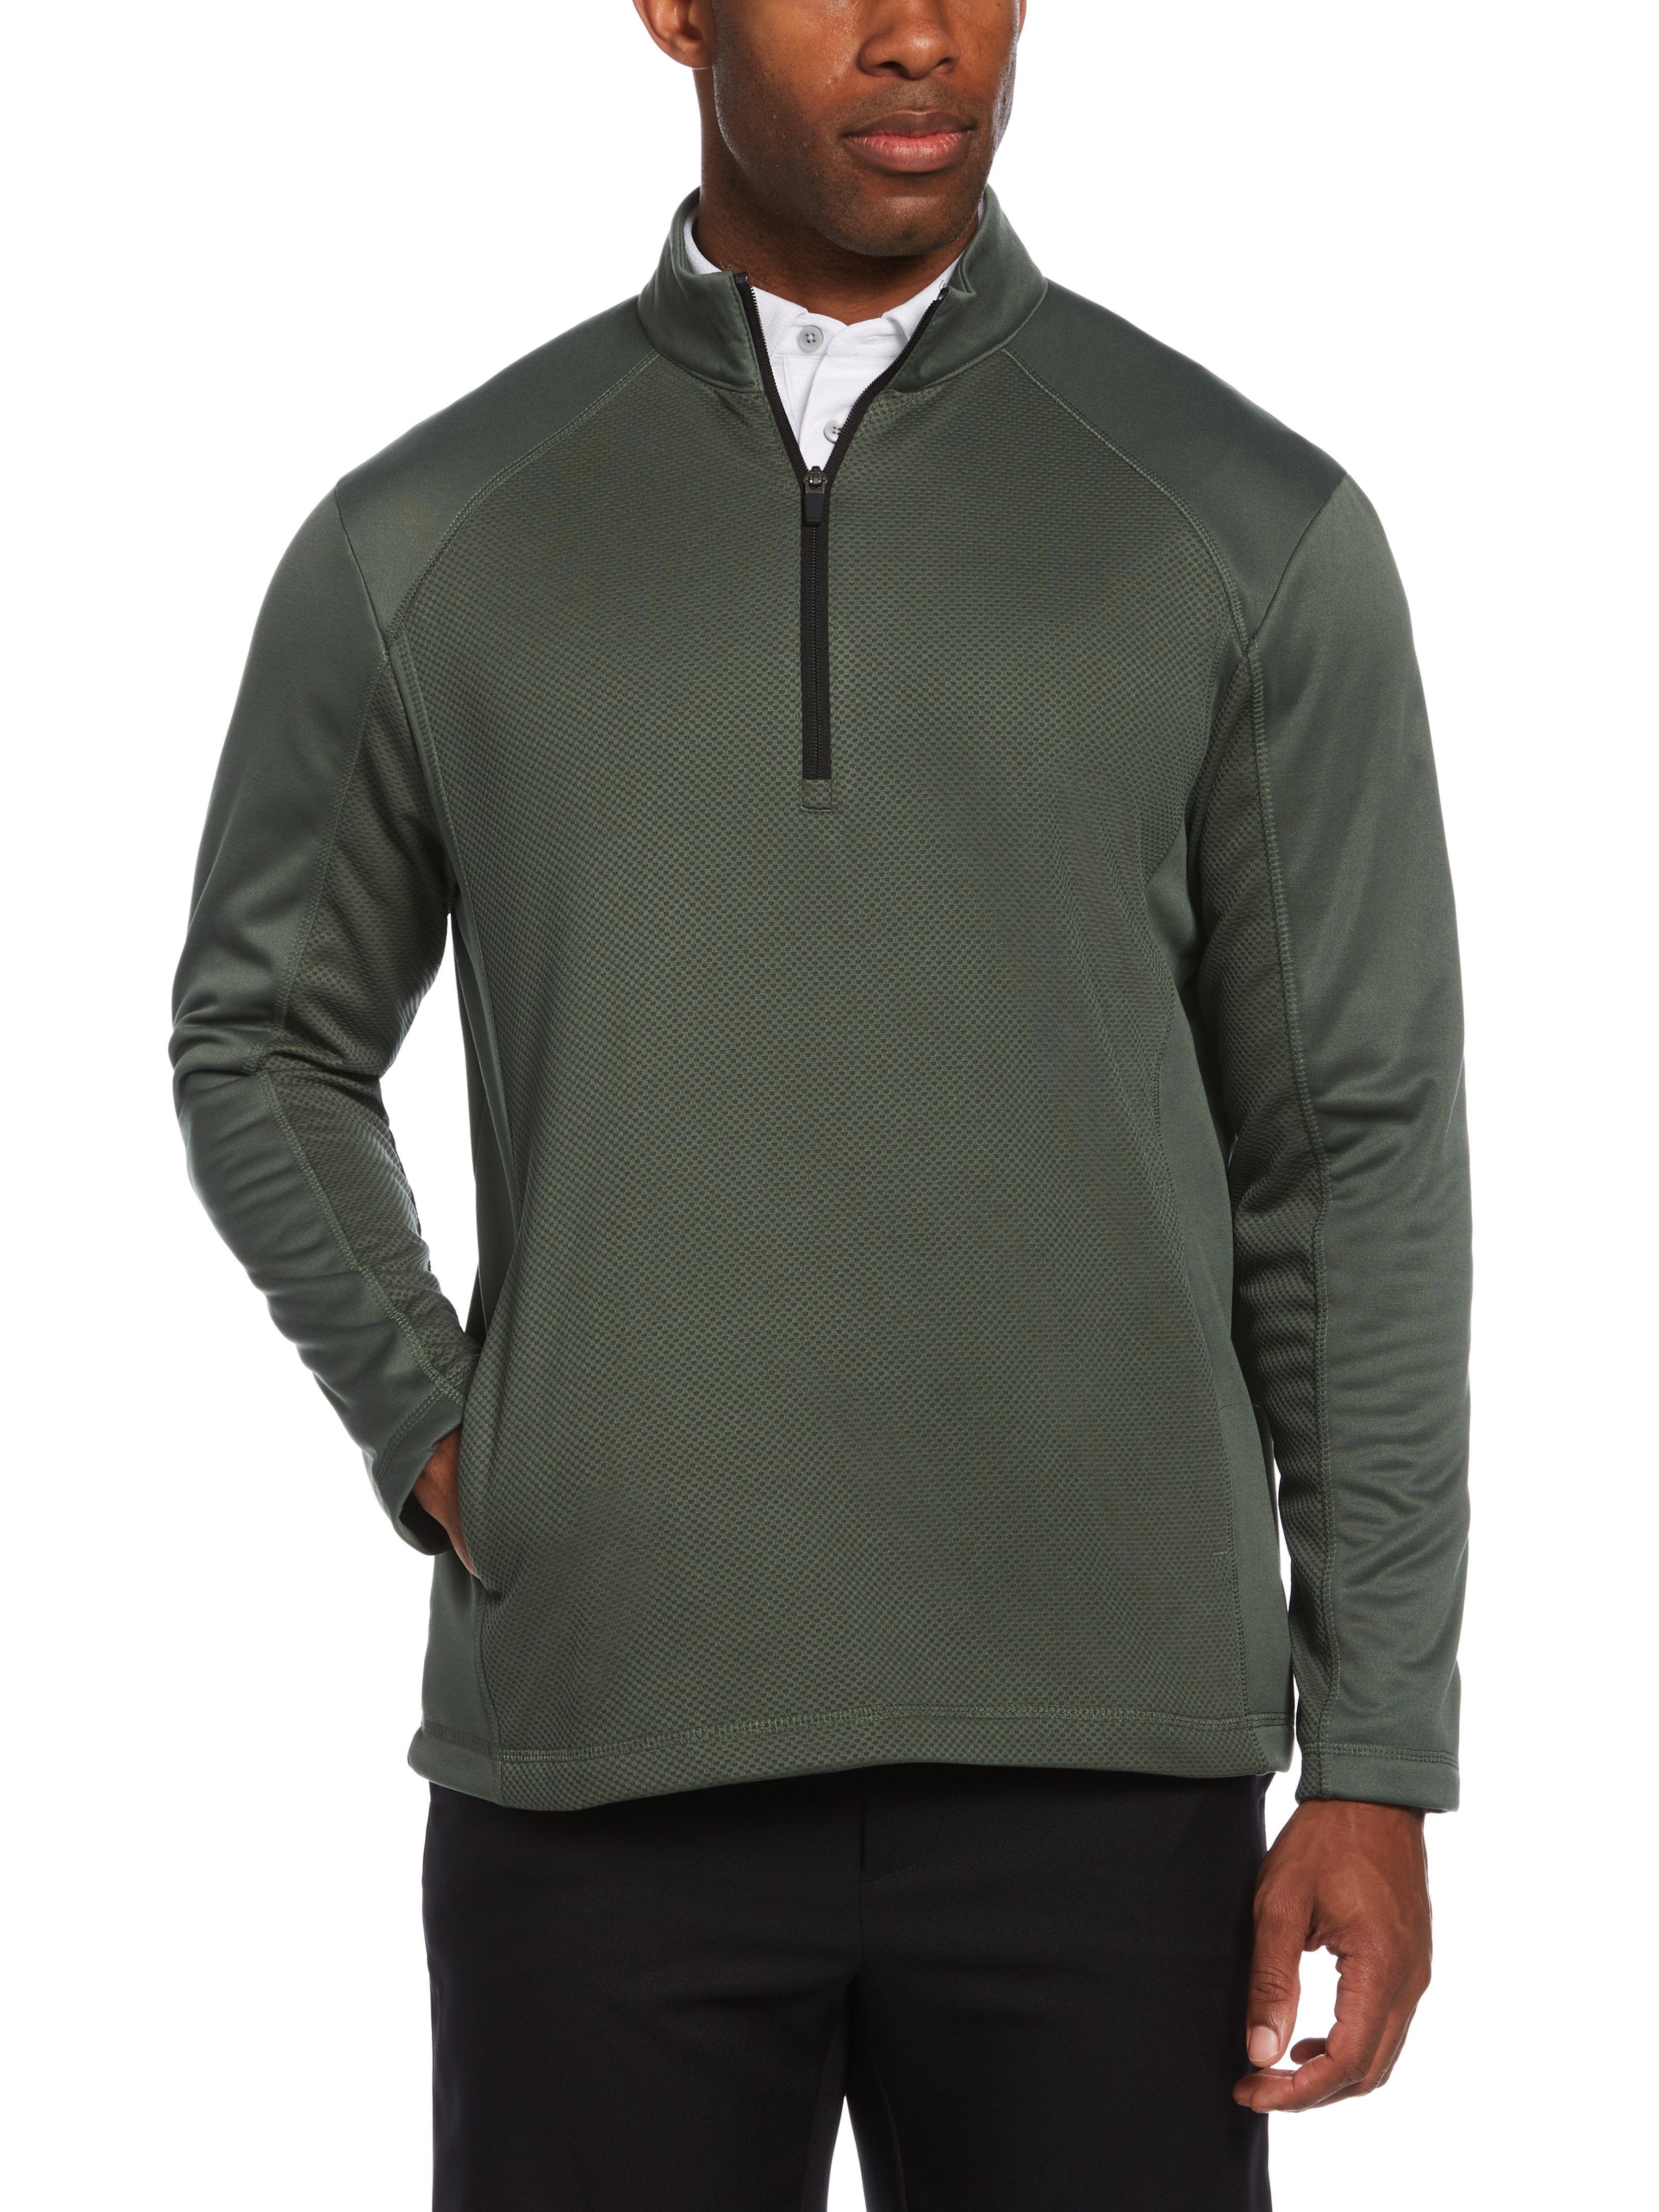 PGA TOUR Apparel Mens Mixed Texture Fleece 1/4 Zip Golf Jacket Top, Size Large, Duck Green, 100% Polyester | Golf Apparel Shop